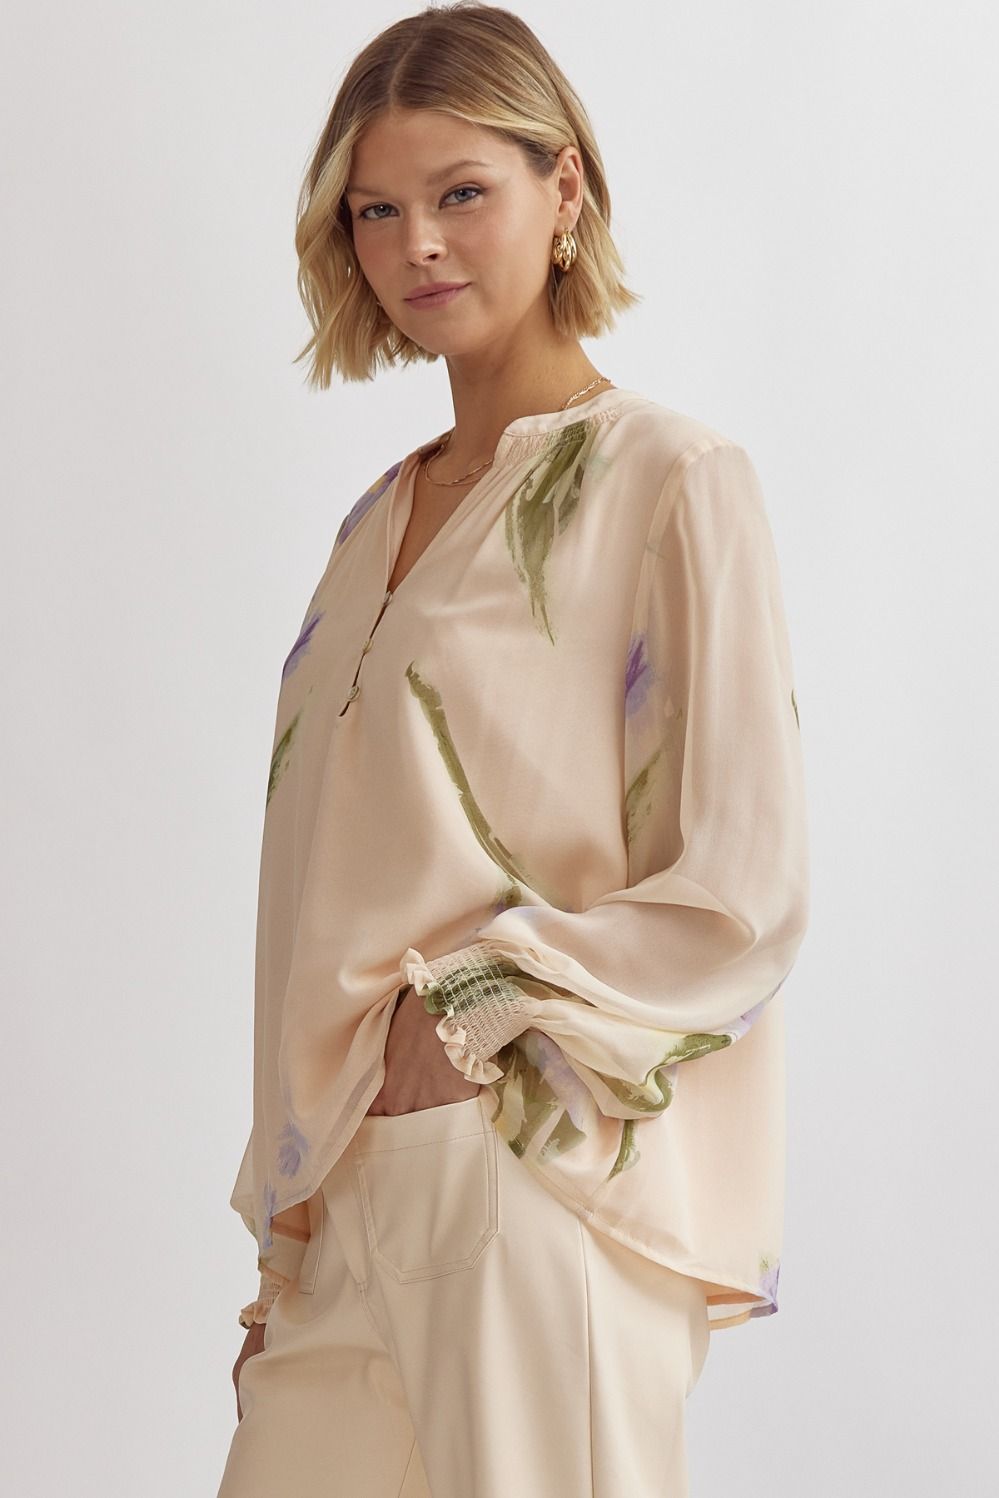 ENTRO INC Women's Top Floral Print V-Neck Long Sleeve Top || David's Clothing